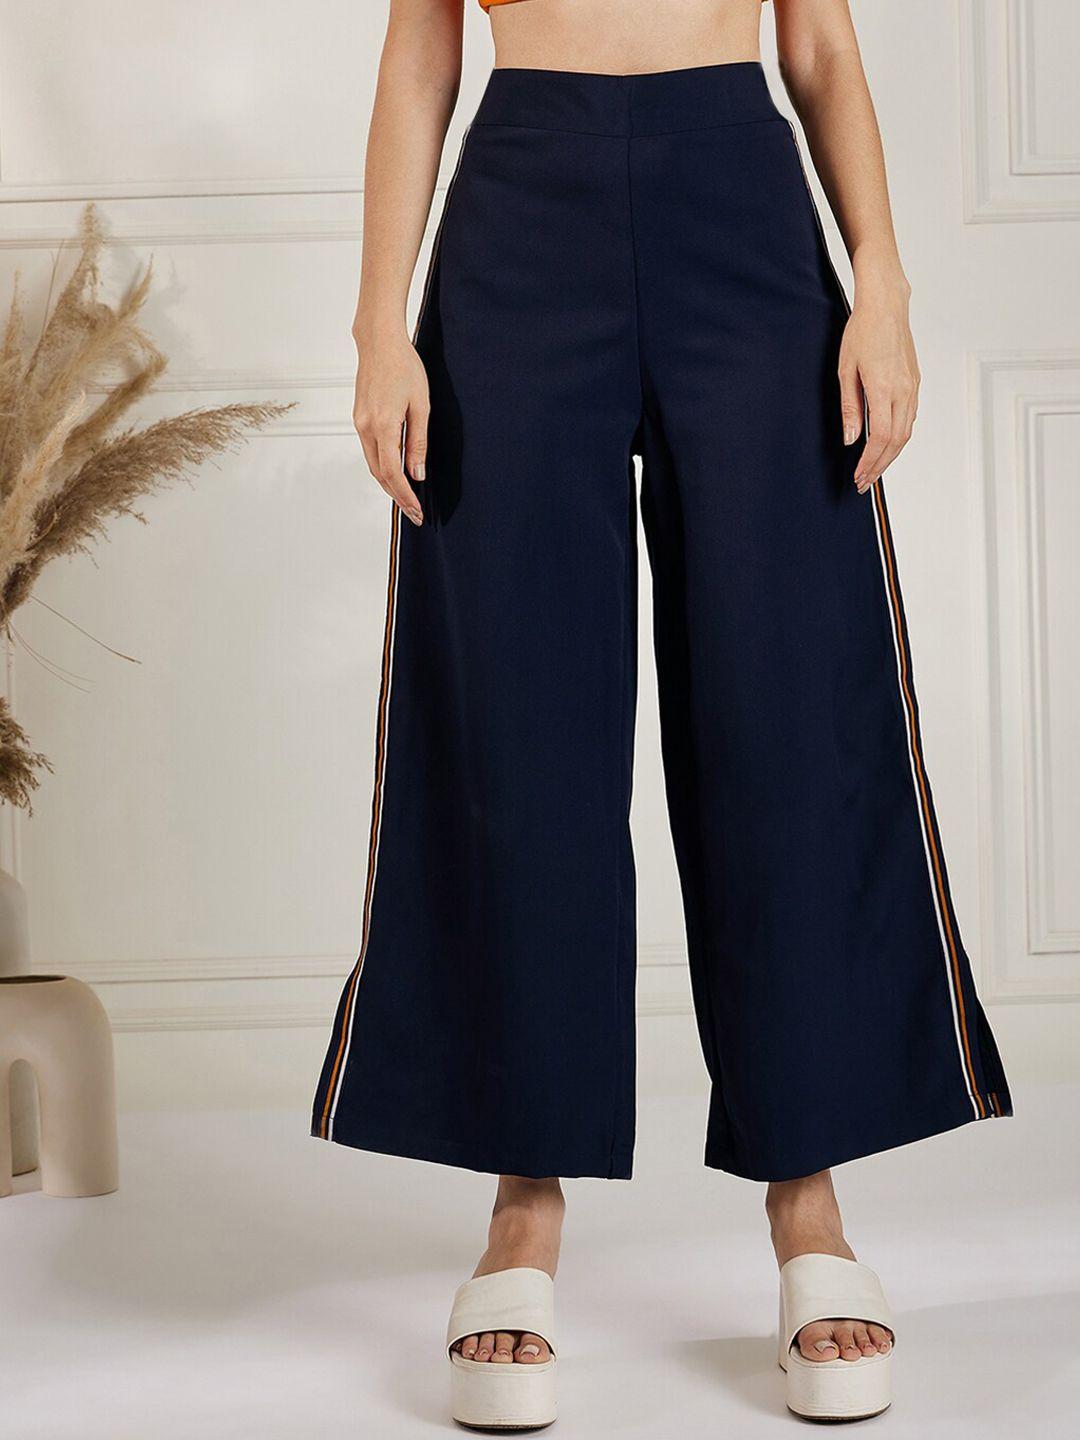 marie claire women navy blue high-rise plain parallel trousers